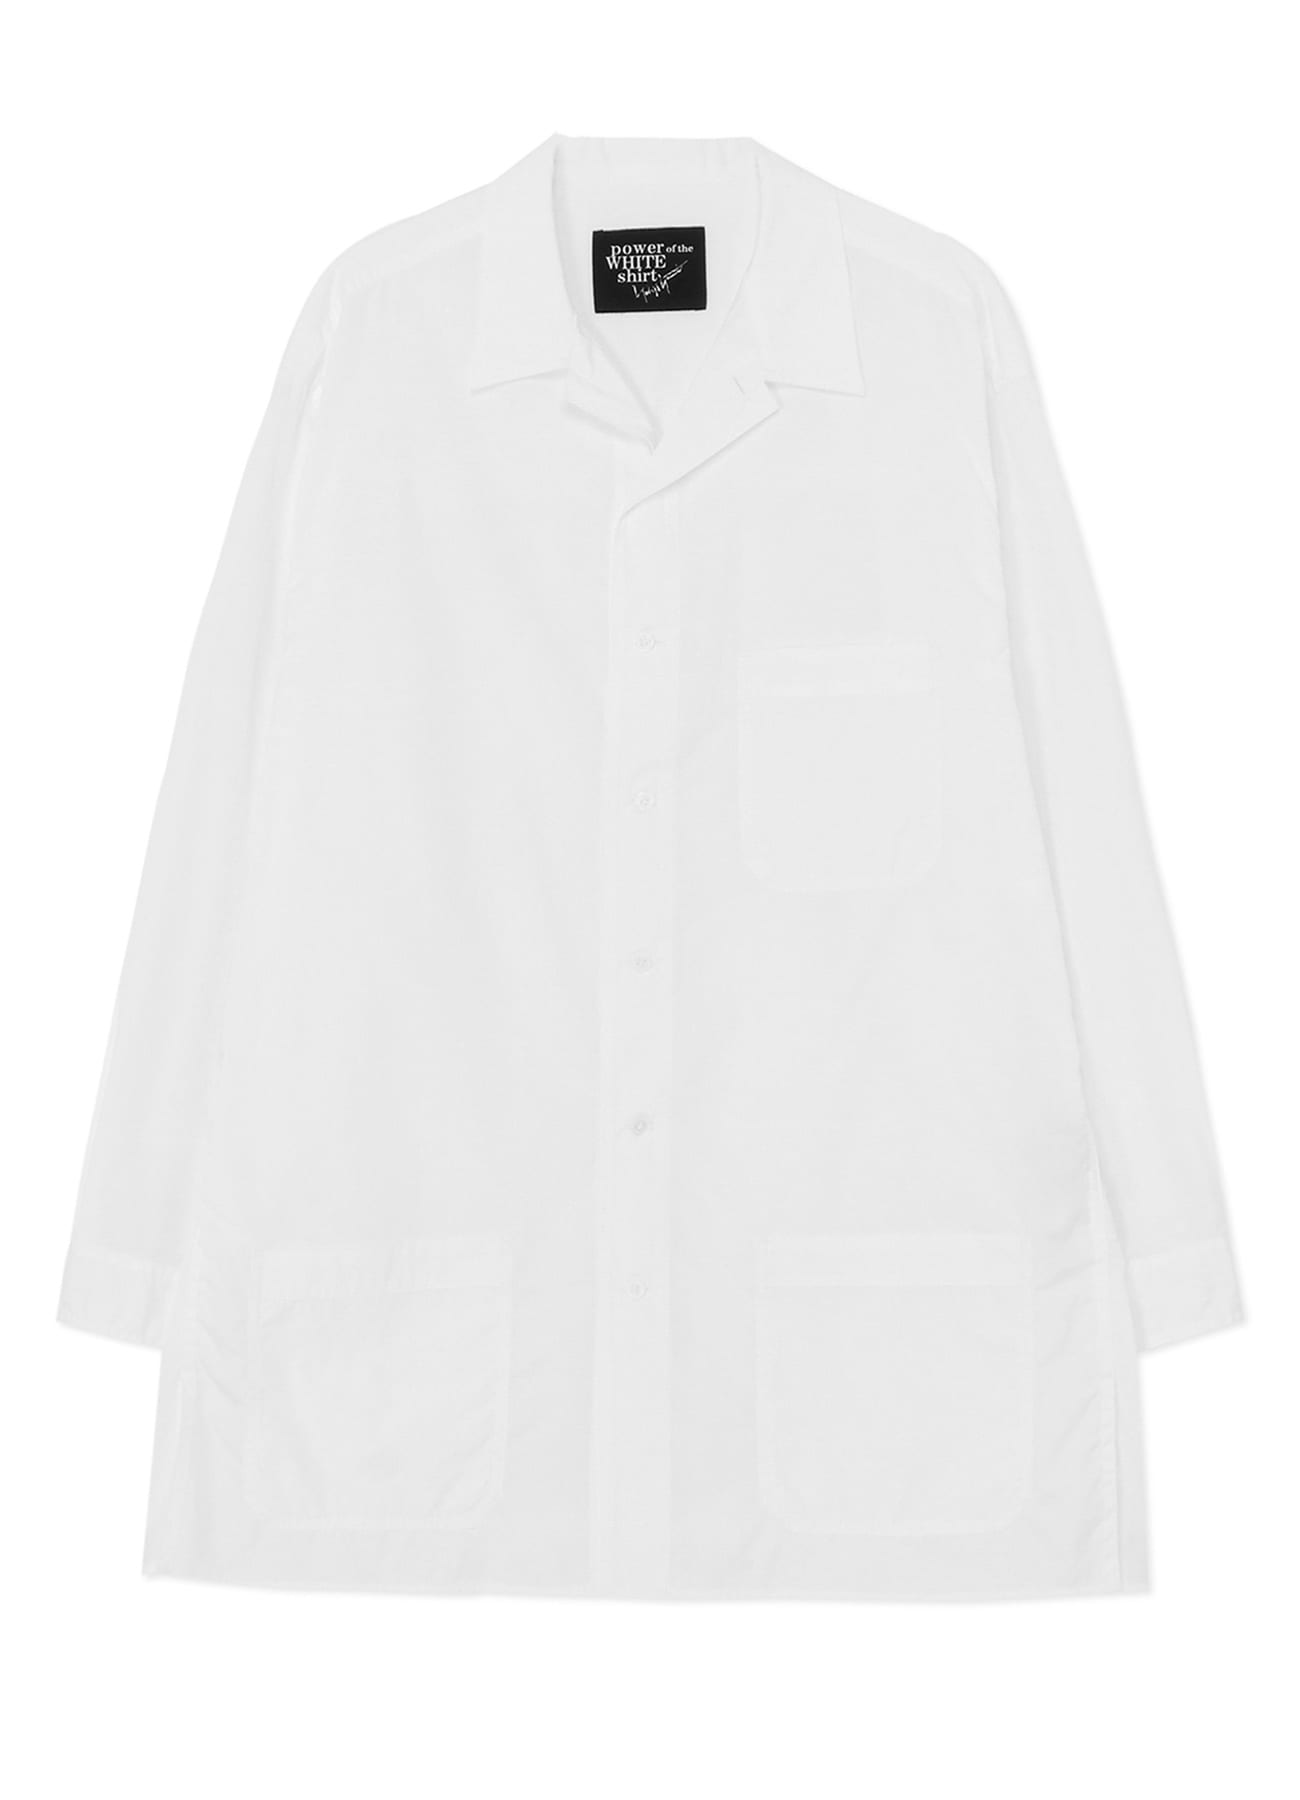 3-POCKET OPEN COLLAR SHIRT(S White): power of the WHITE shirt｜THE 